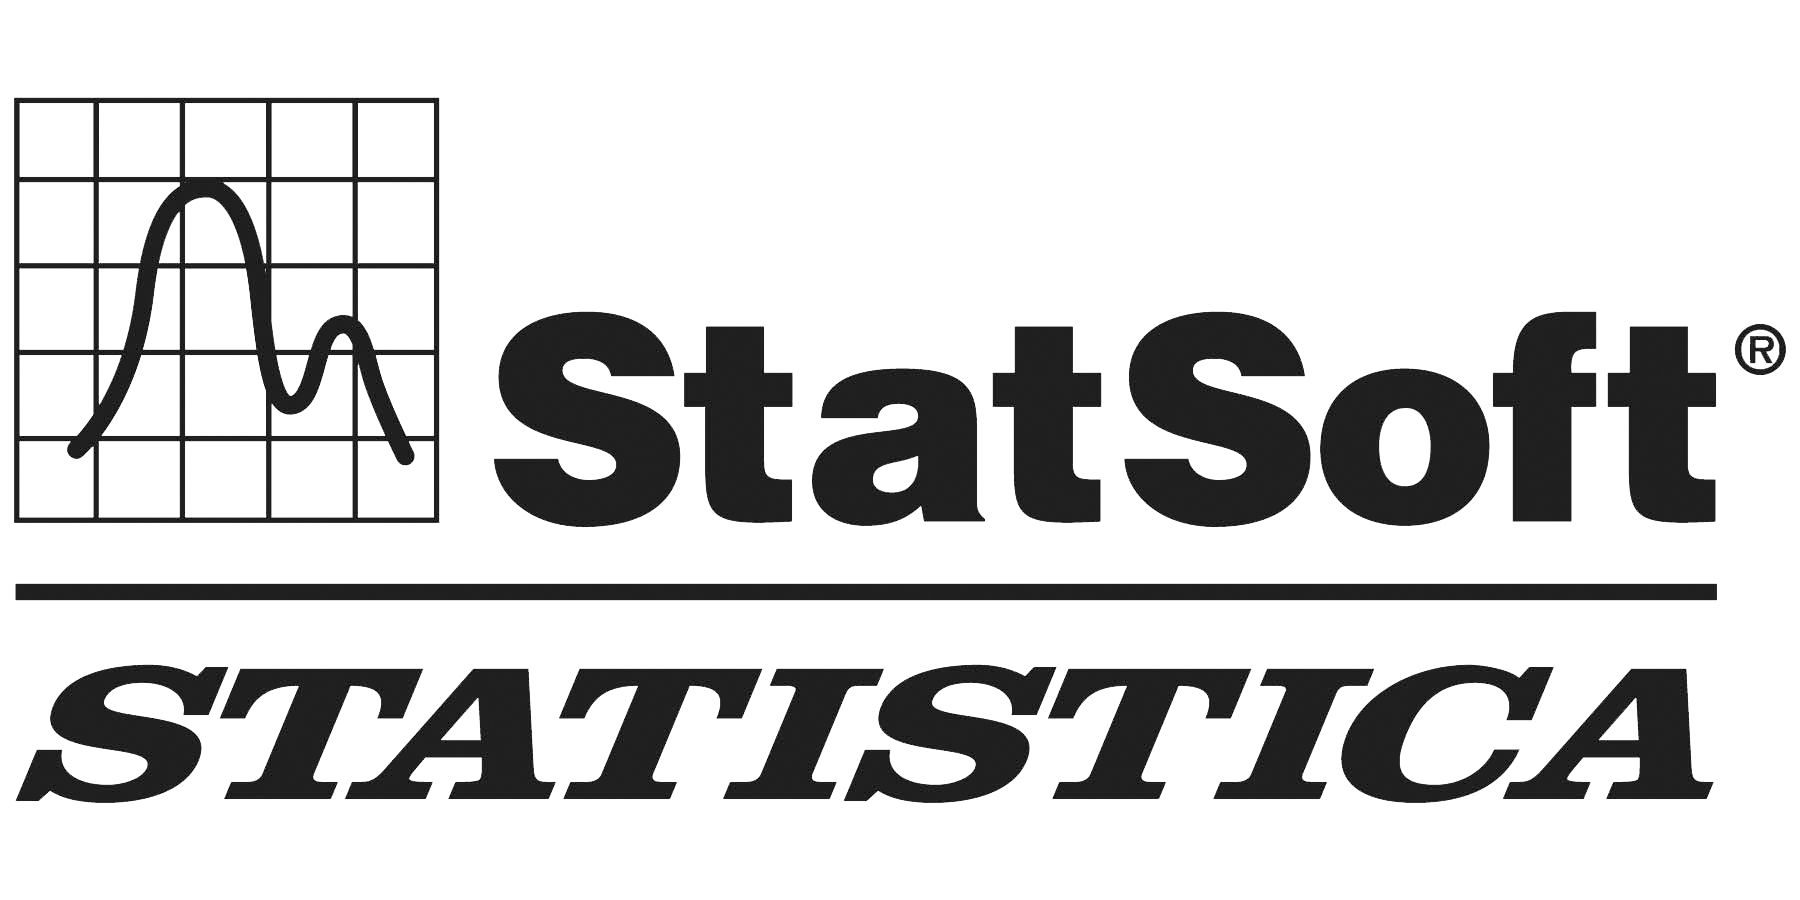 StatSoft Polska award for the best doctoral dissertation using Statistica software